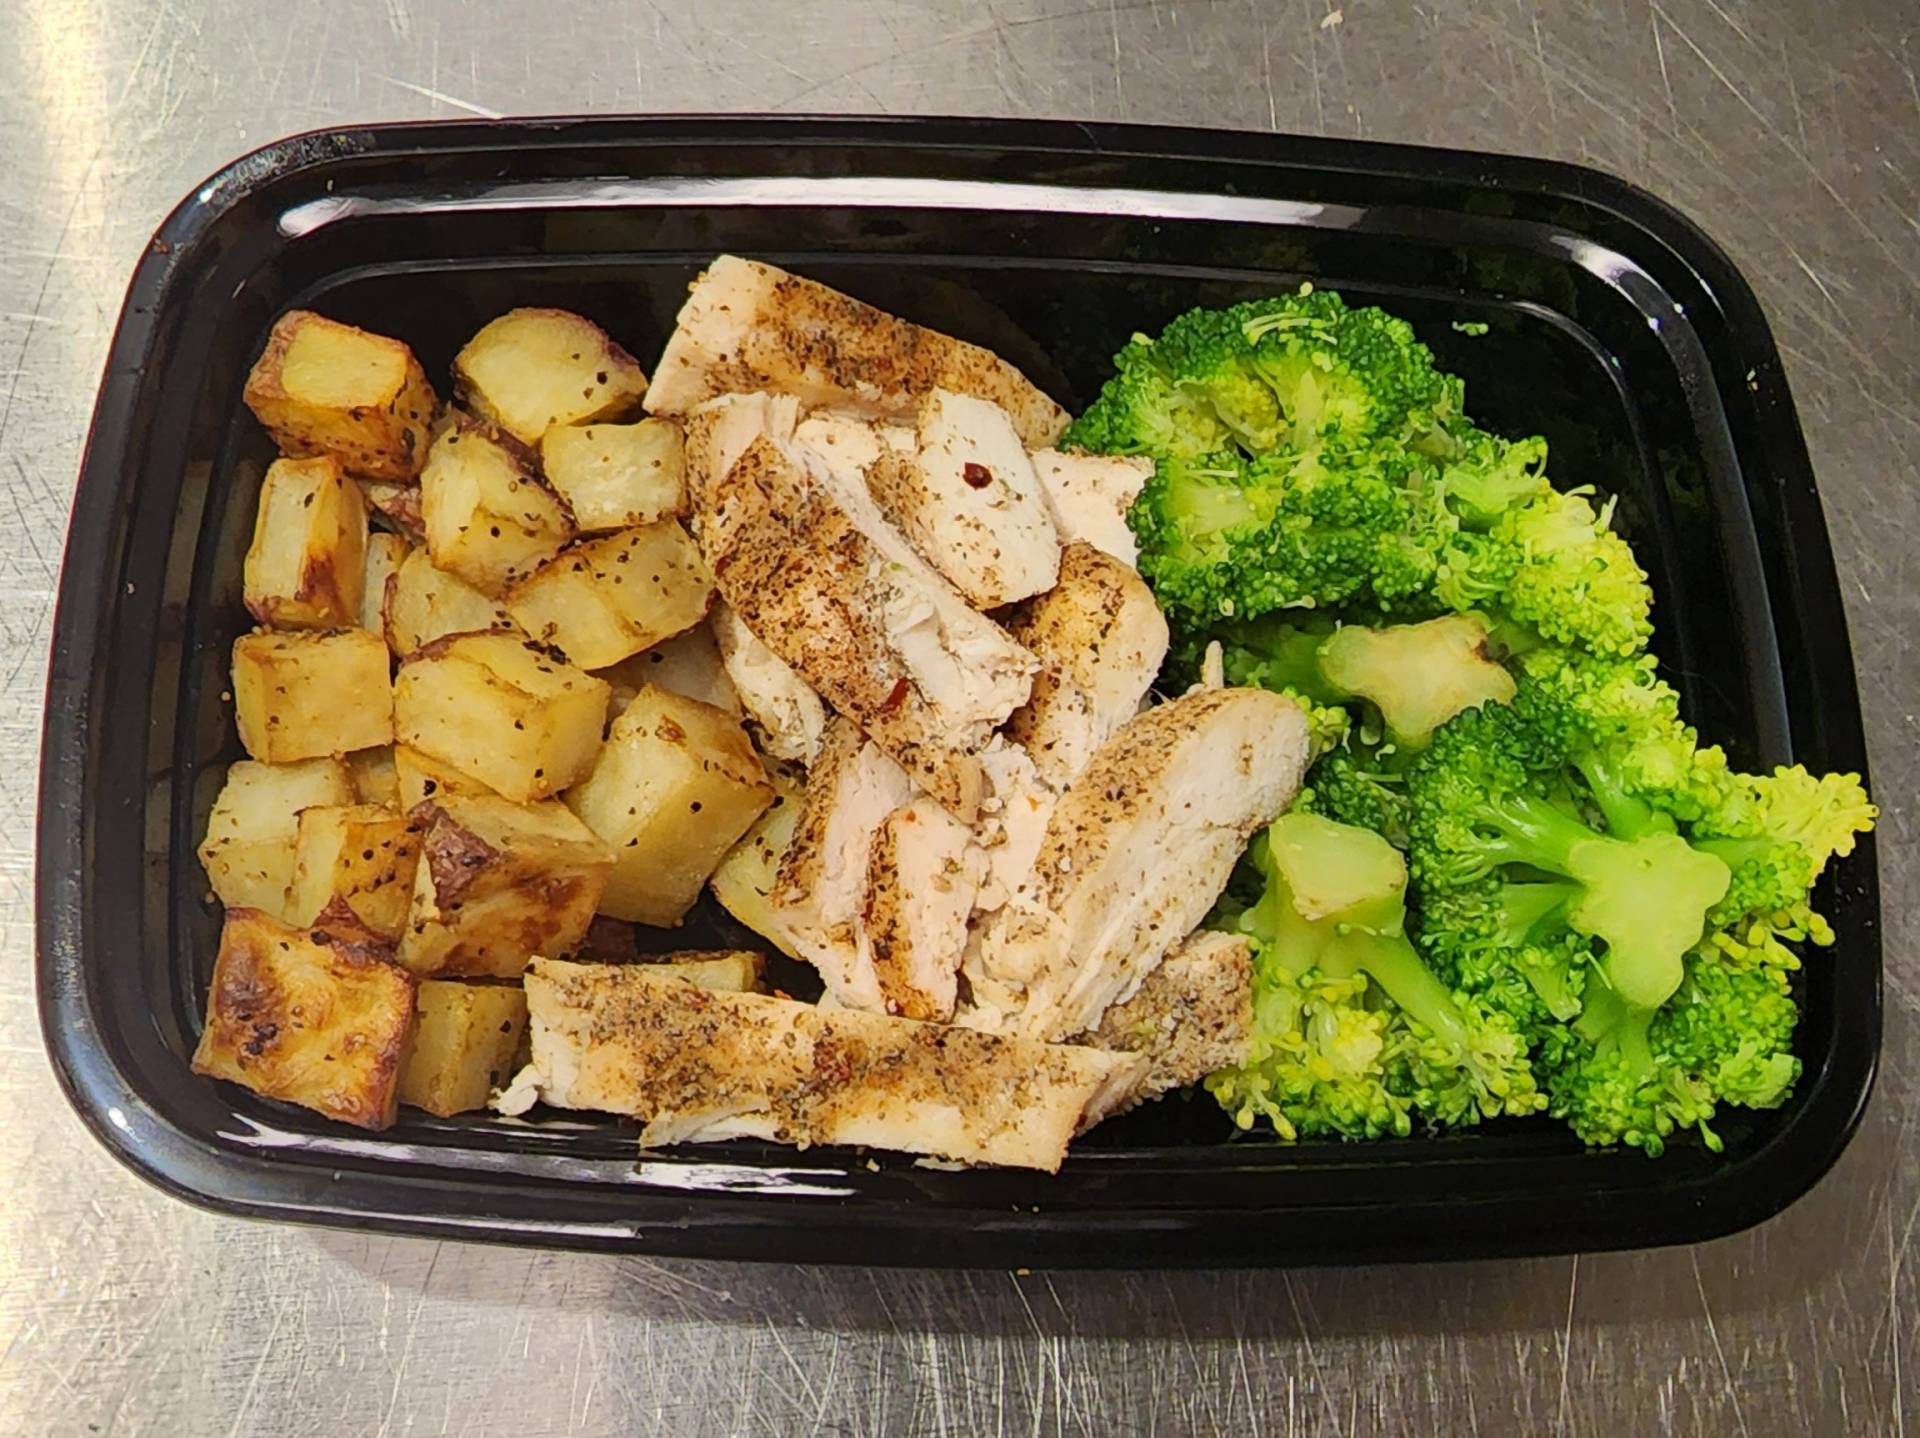 Basics - Chicken, Potatoes and Broccoli